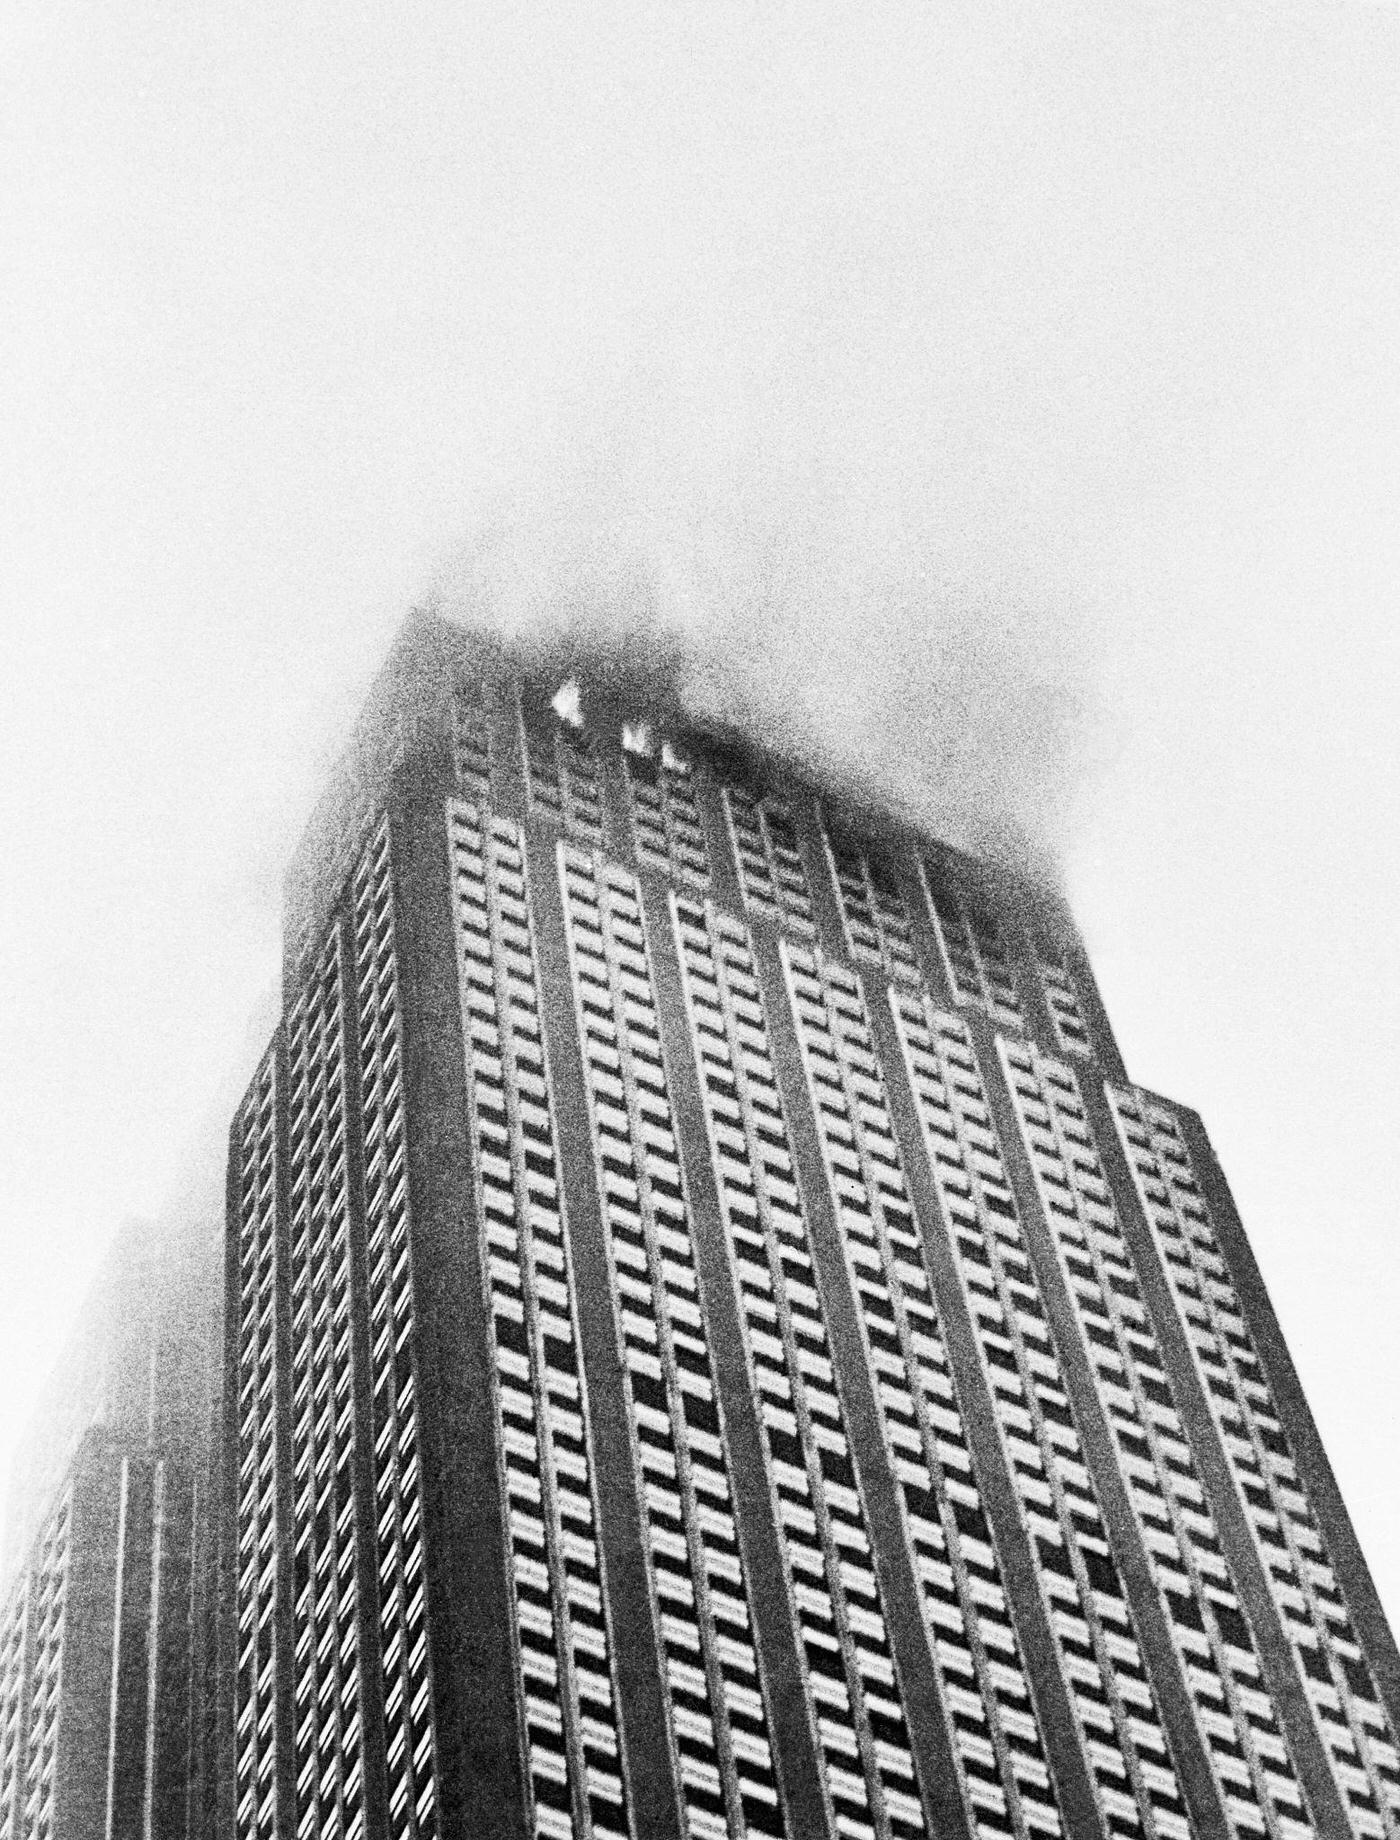 Empire State Building Burning After Plane Crash